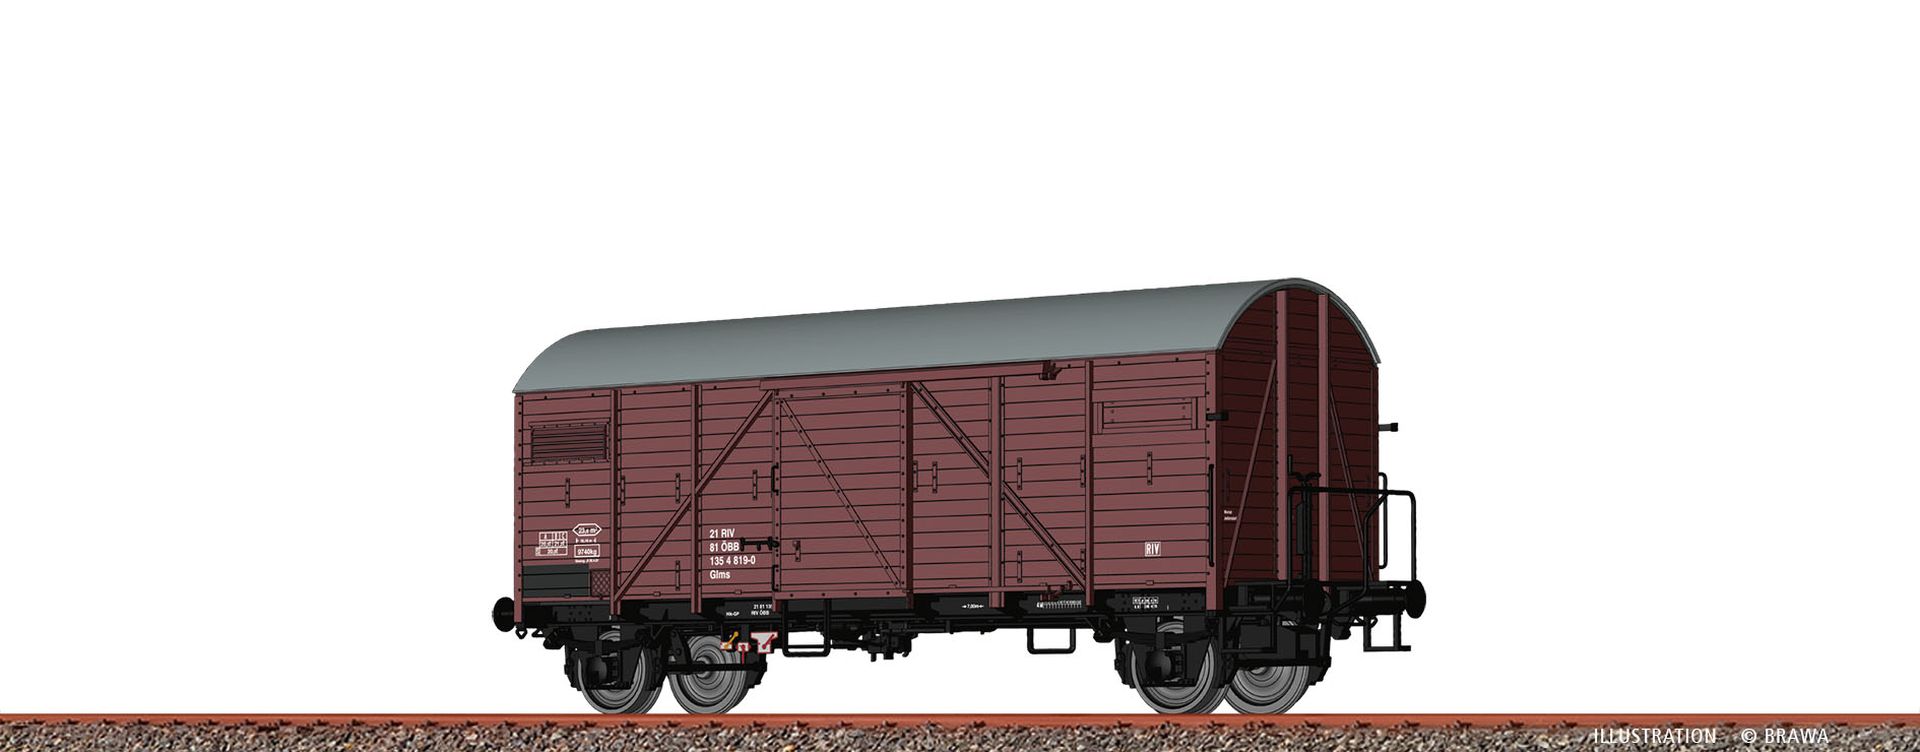 Brawa 50729 - Gedeckter Güterwagen Glms, ÖBB, Ep.IV